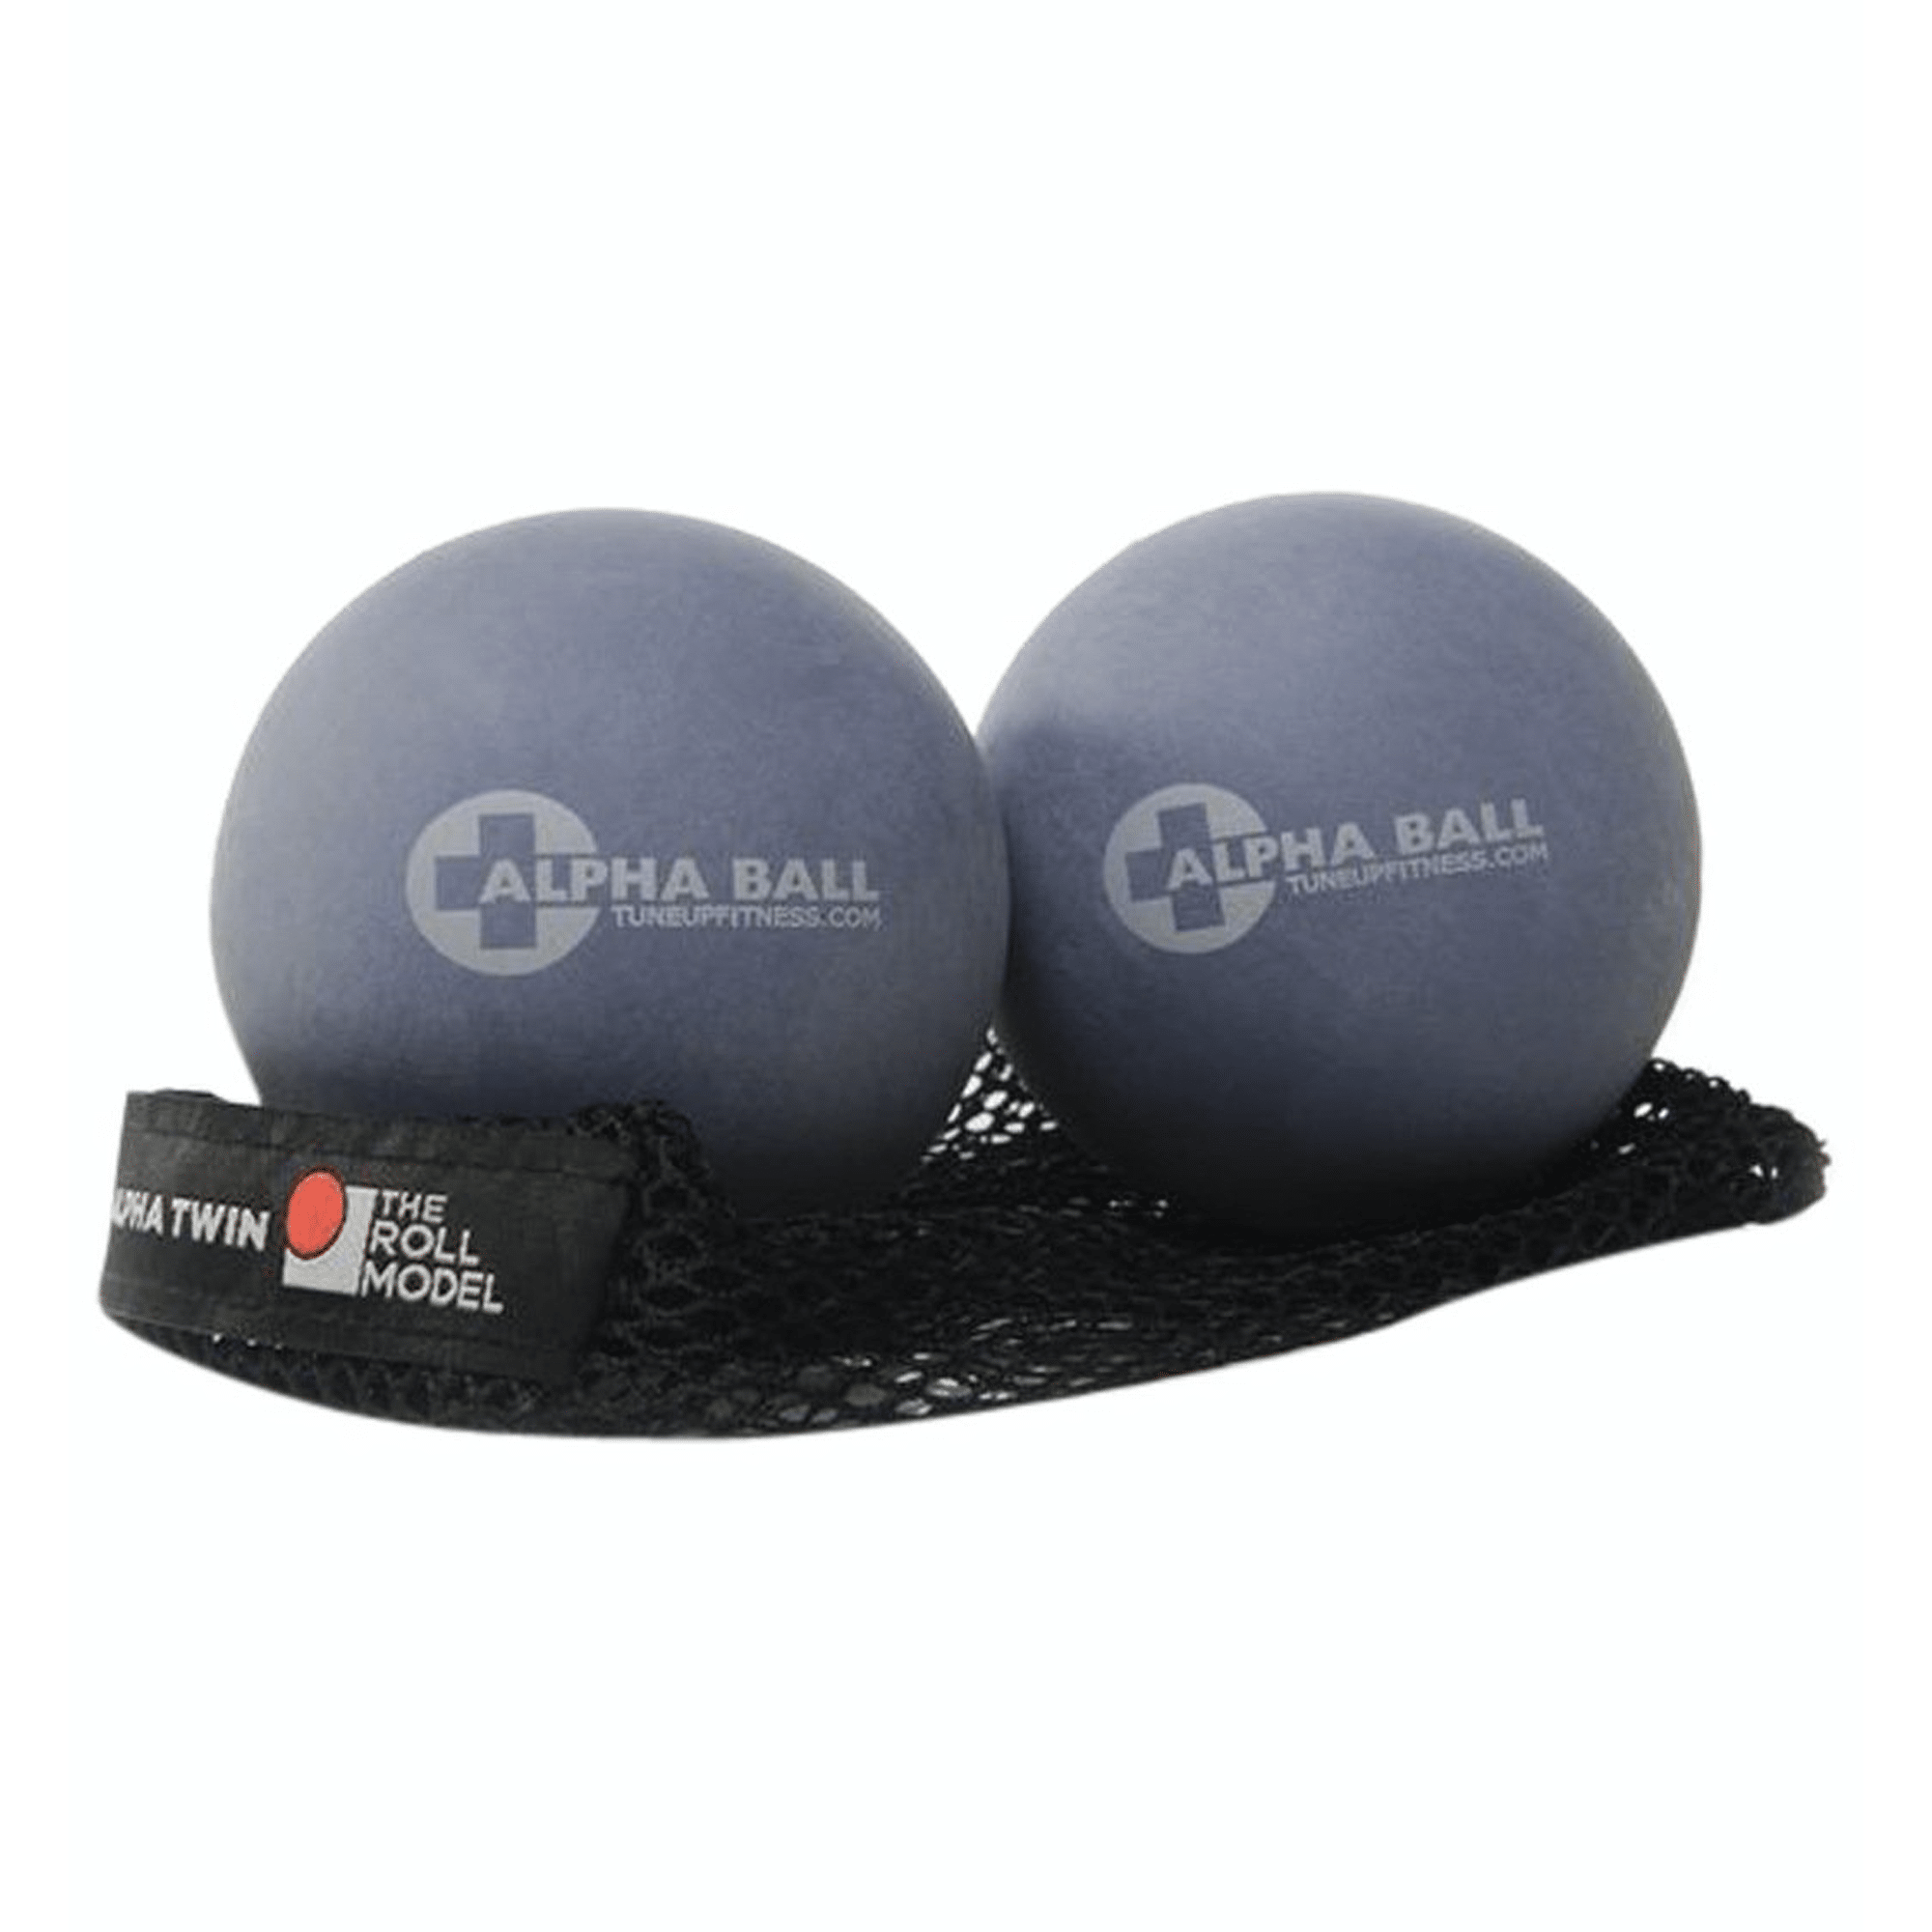 Massagebolde - Therapy Balls fra Tune Up Fitness